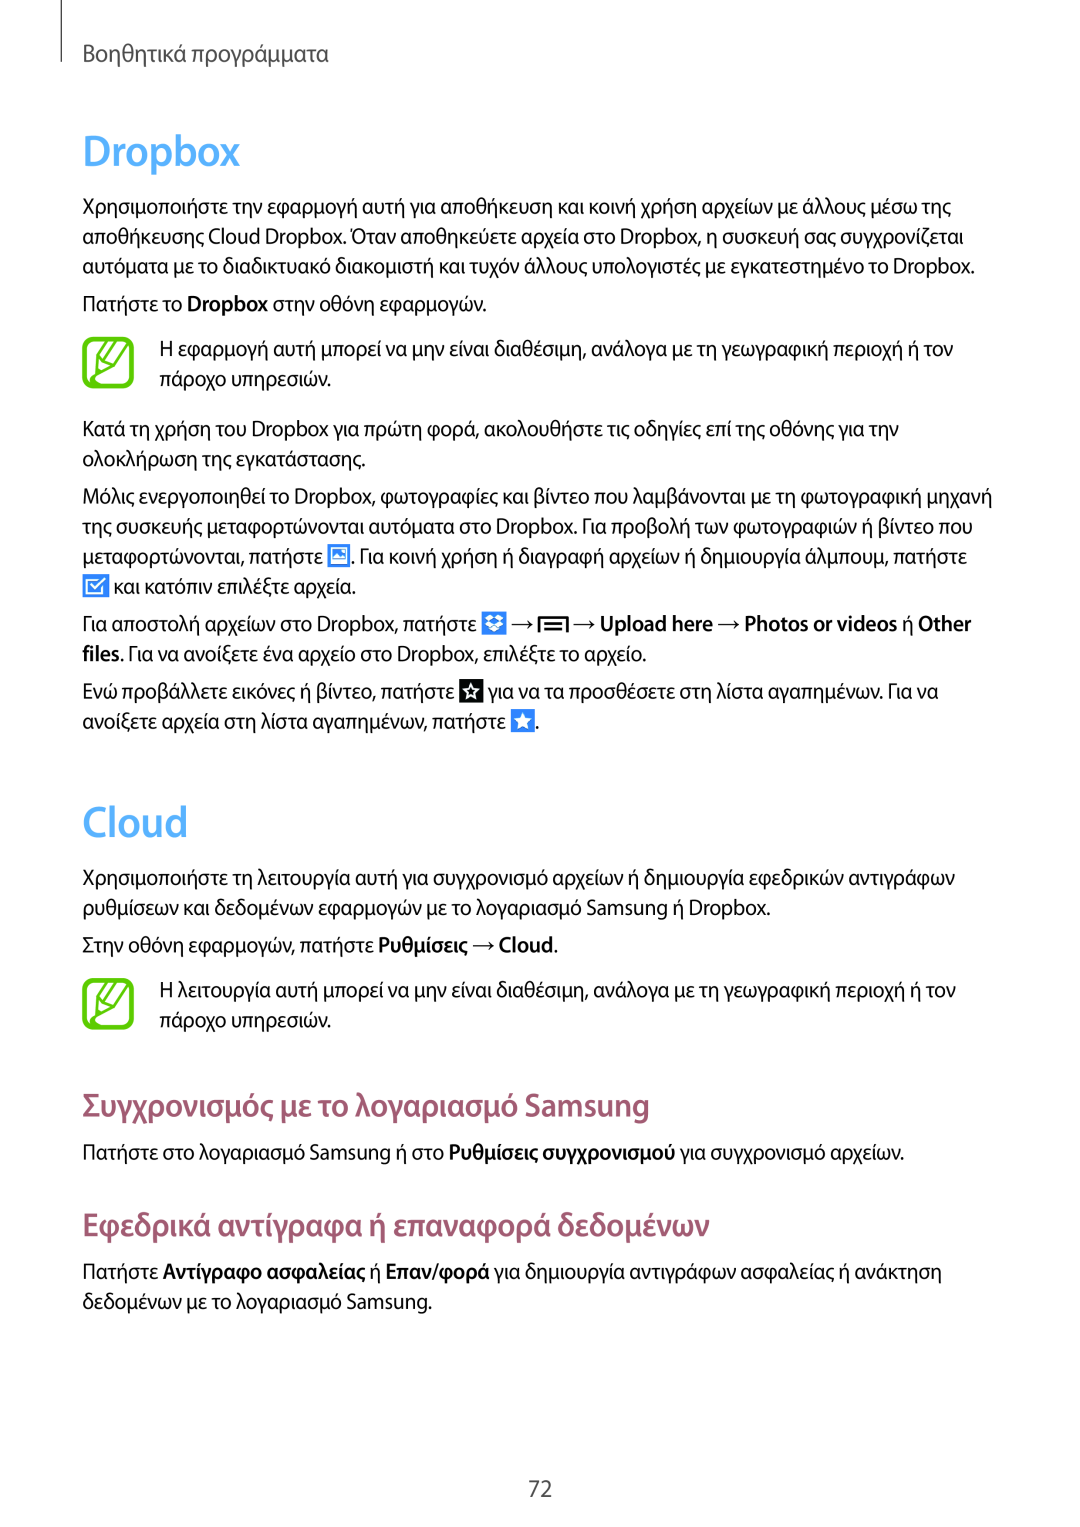 Samsung GT-P5210MKAEUR Dropbox, Cloud, Συγχρονισμός με το λογαριασμό Samsung, Εφεδρικά αντίγραφα ή επαναφορά δεδομένων 